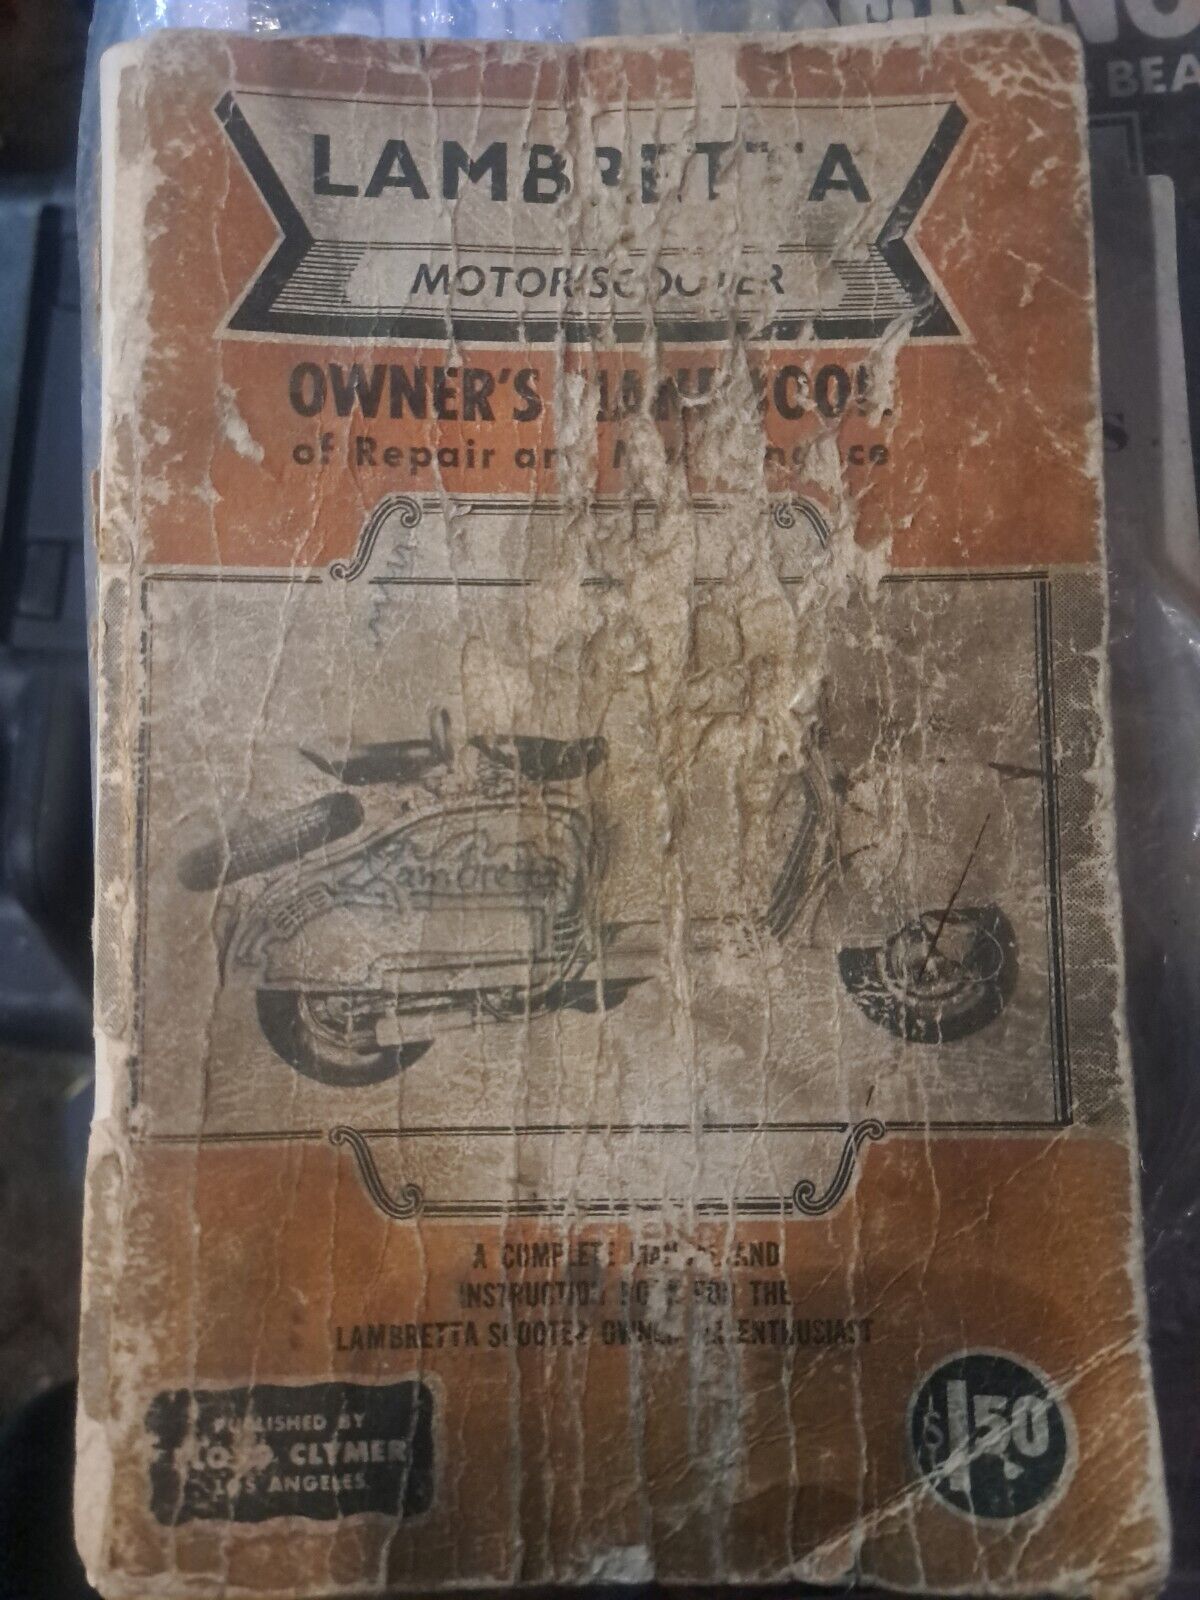 Vintage LAMBRETTA Motor Scooter Moped Owner's Handbook book by Floyd Clymer Bad